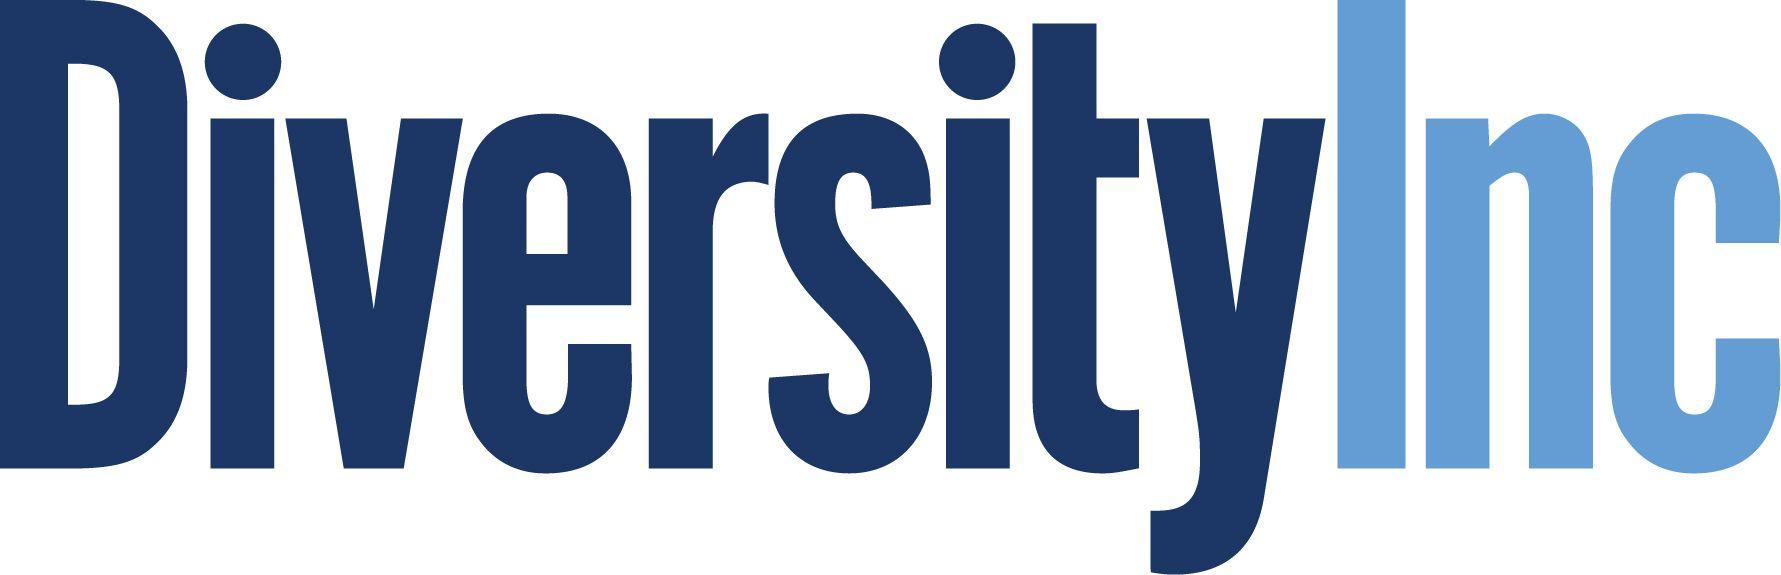 DiversityInc Logo - Best Photo of DiversityInc 2014 Logo Inc Top